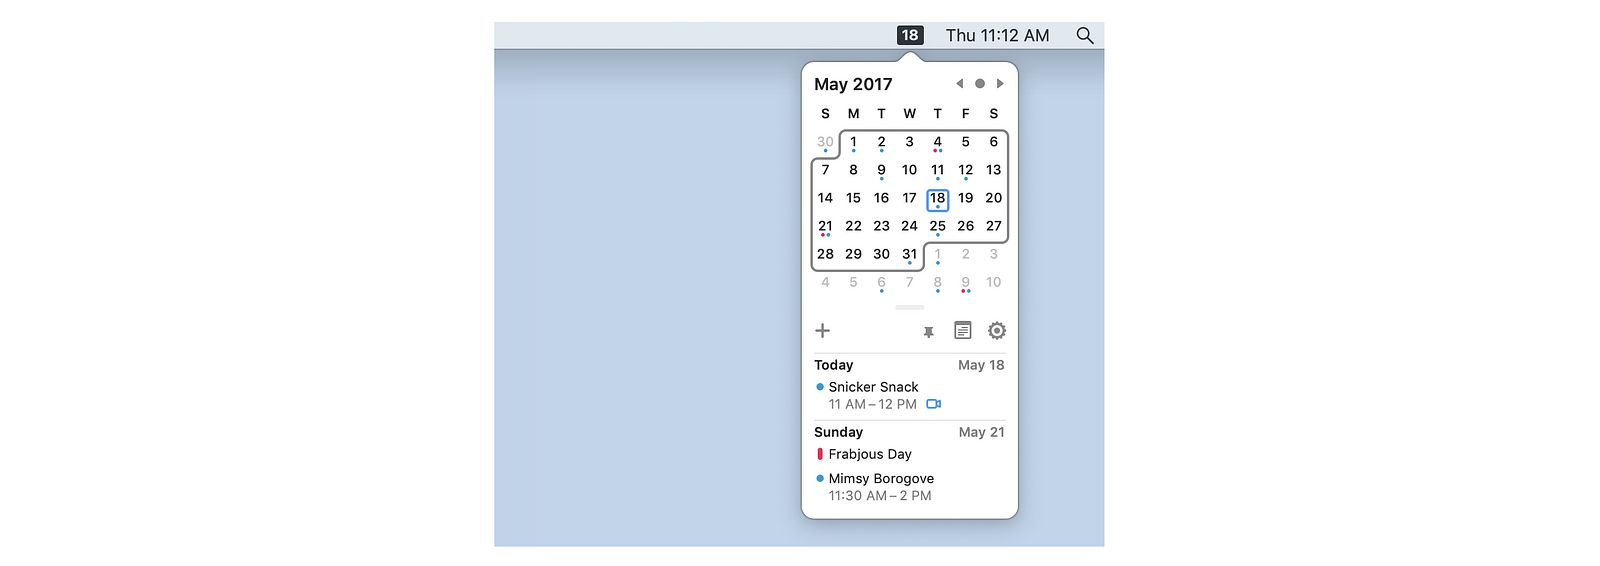 A screenshot showing the ItsyCal drop down calendar.